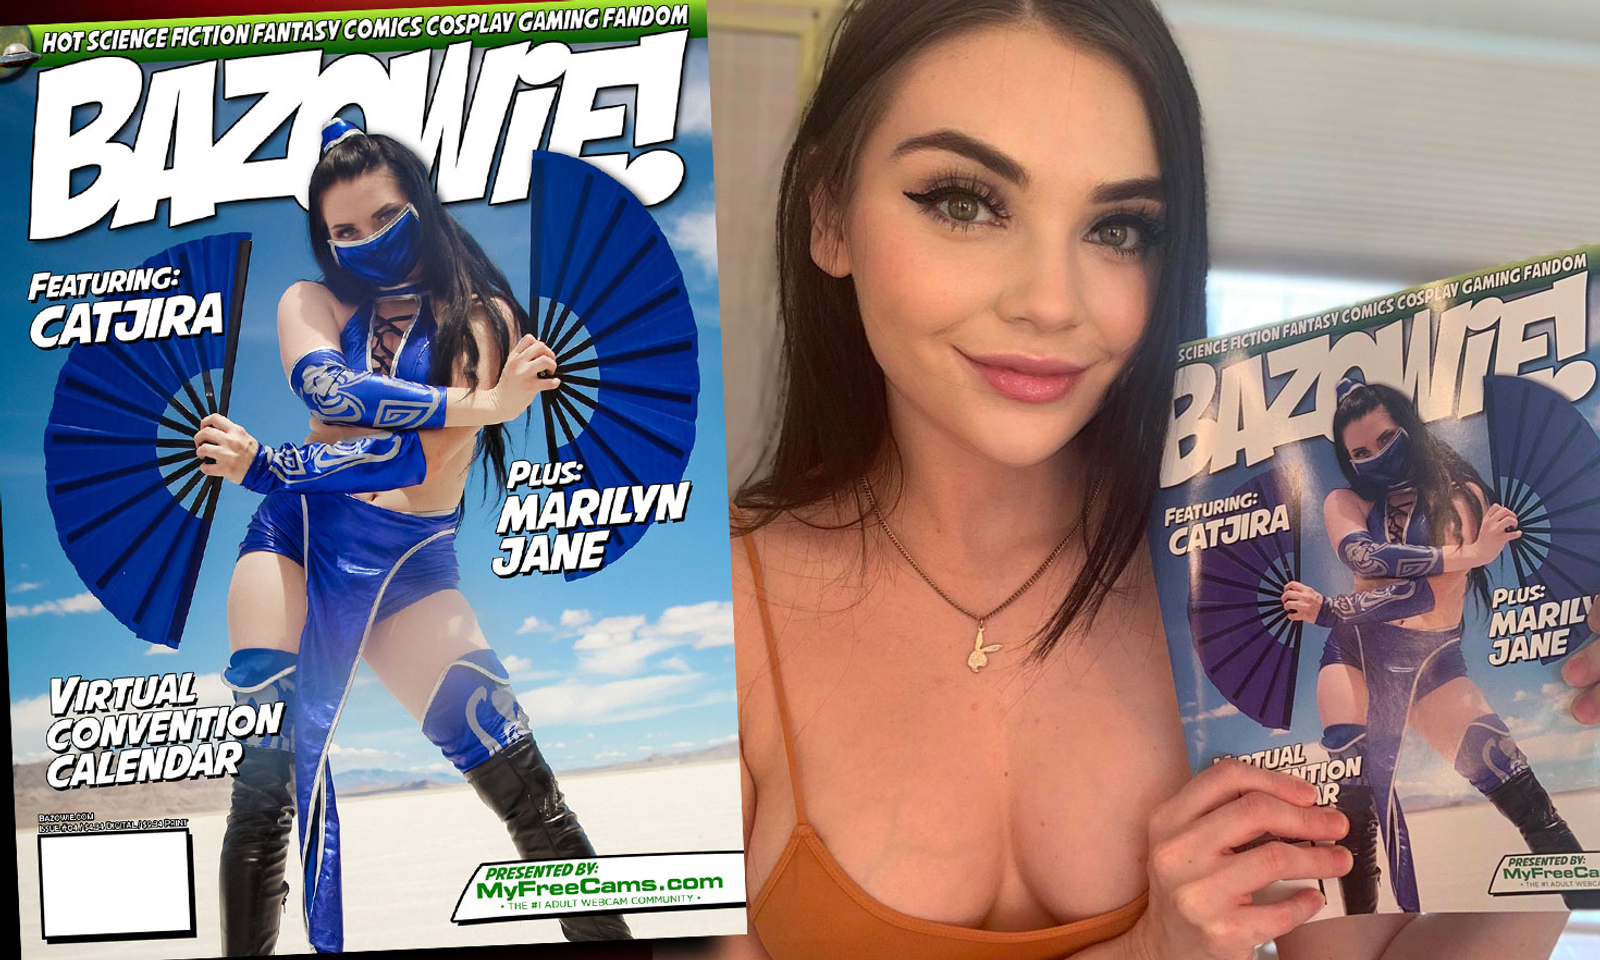 Catjira Mortal Kombat Cosplay Showcased in 'Bazowie!' Magazine